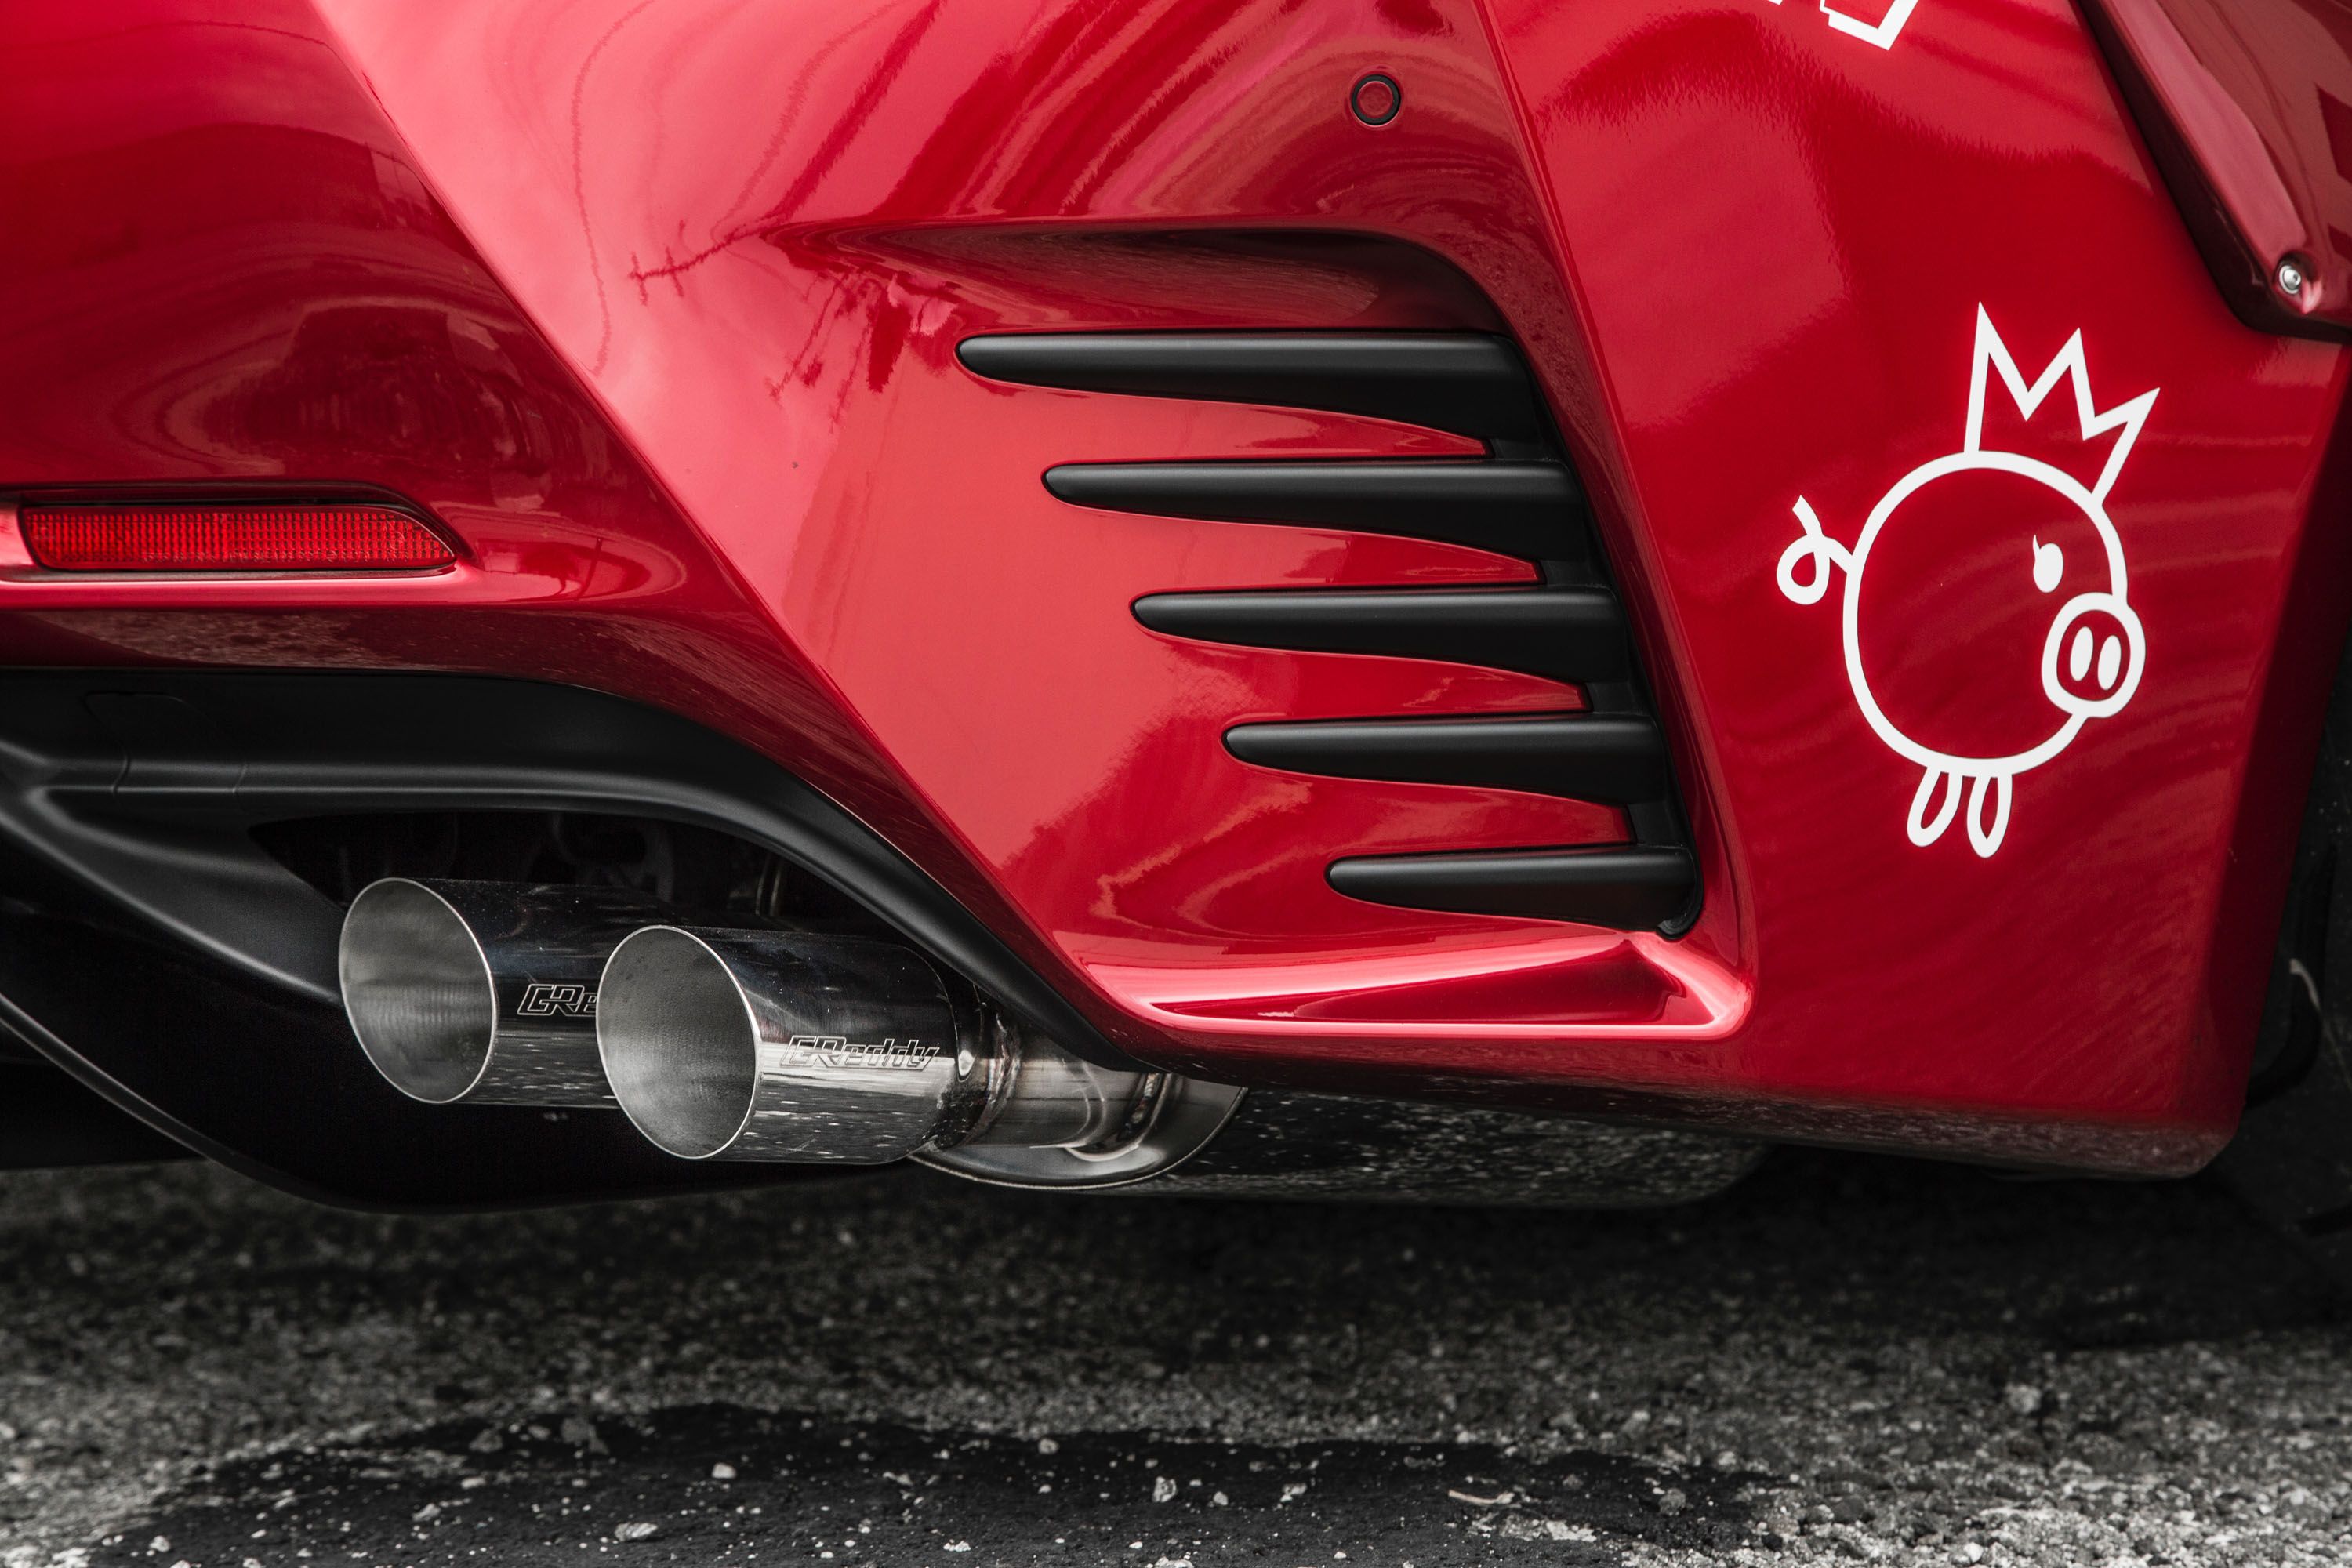 2015 Lexus RC 350 F SPORT by Gordon Ting/Beyond Marketing